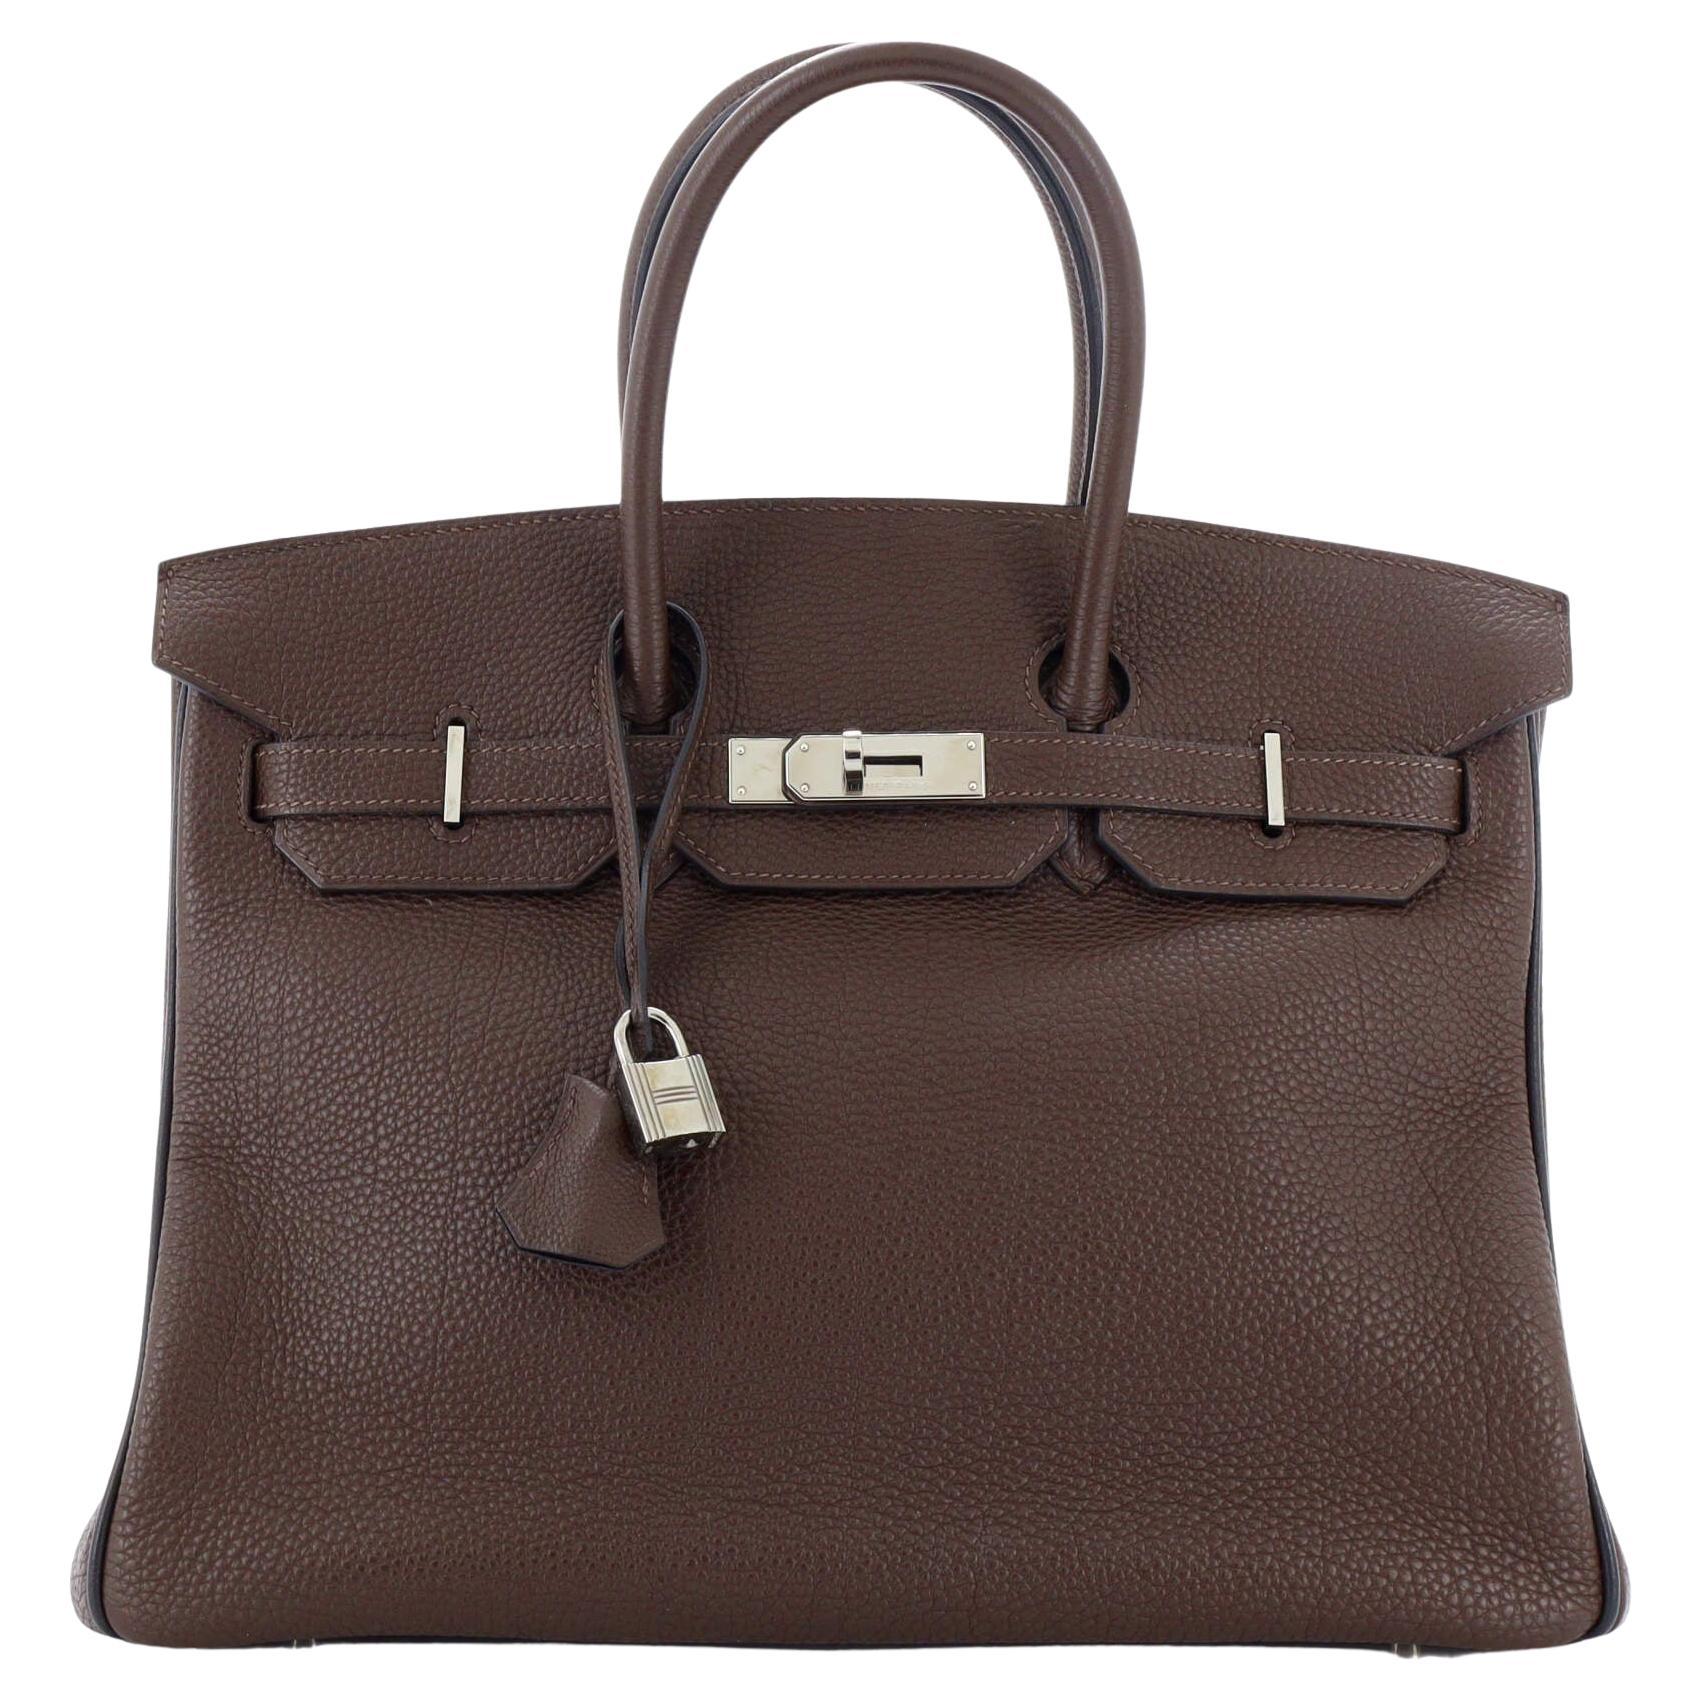 Hermes Birkin Handbag Bicolor Togo with Palladium Hardware 35